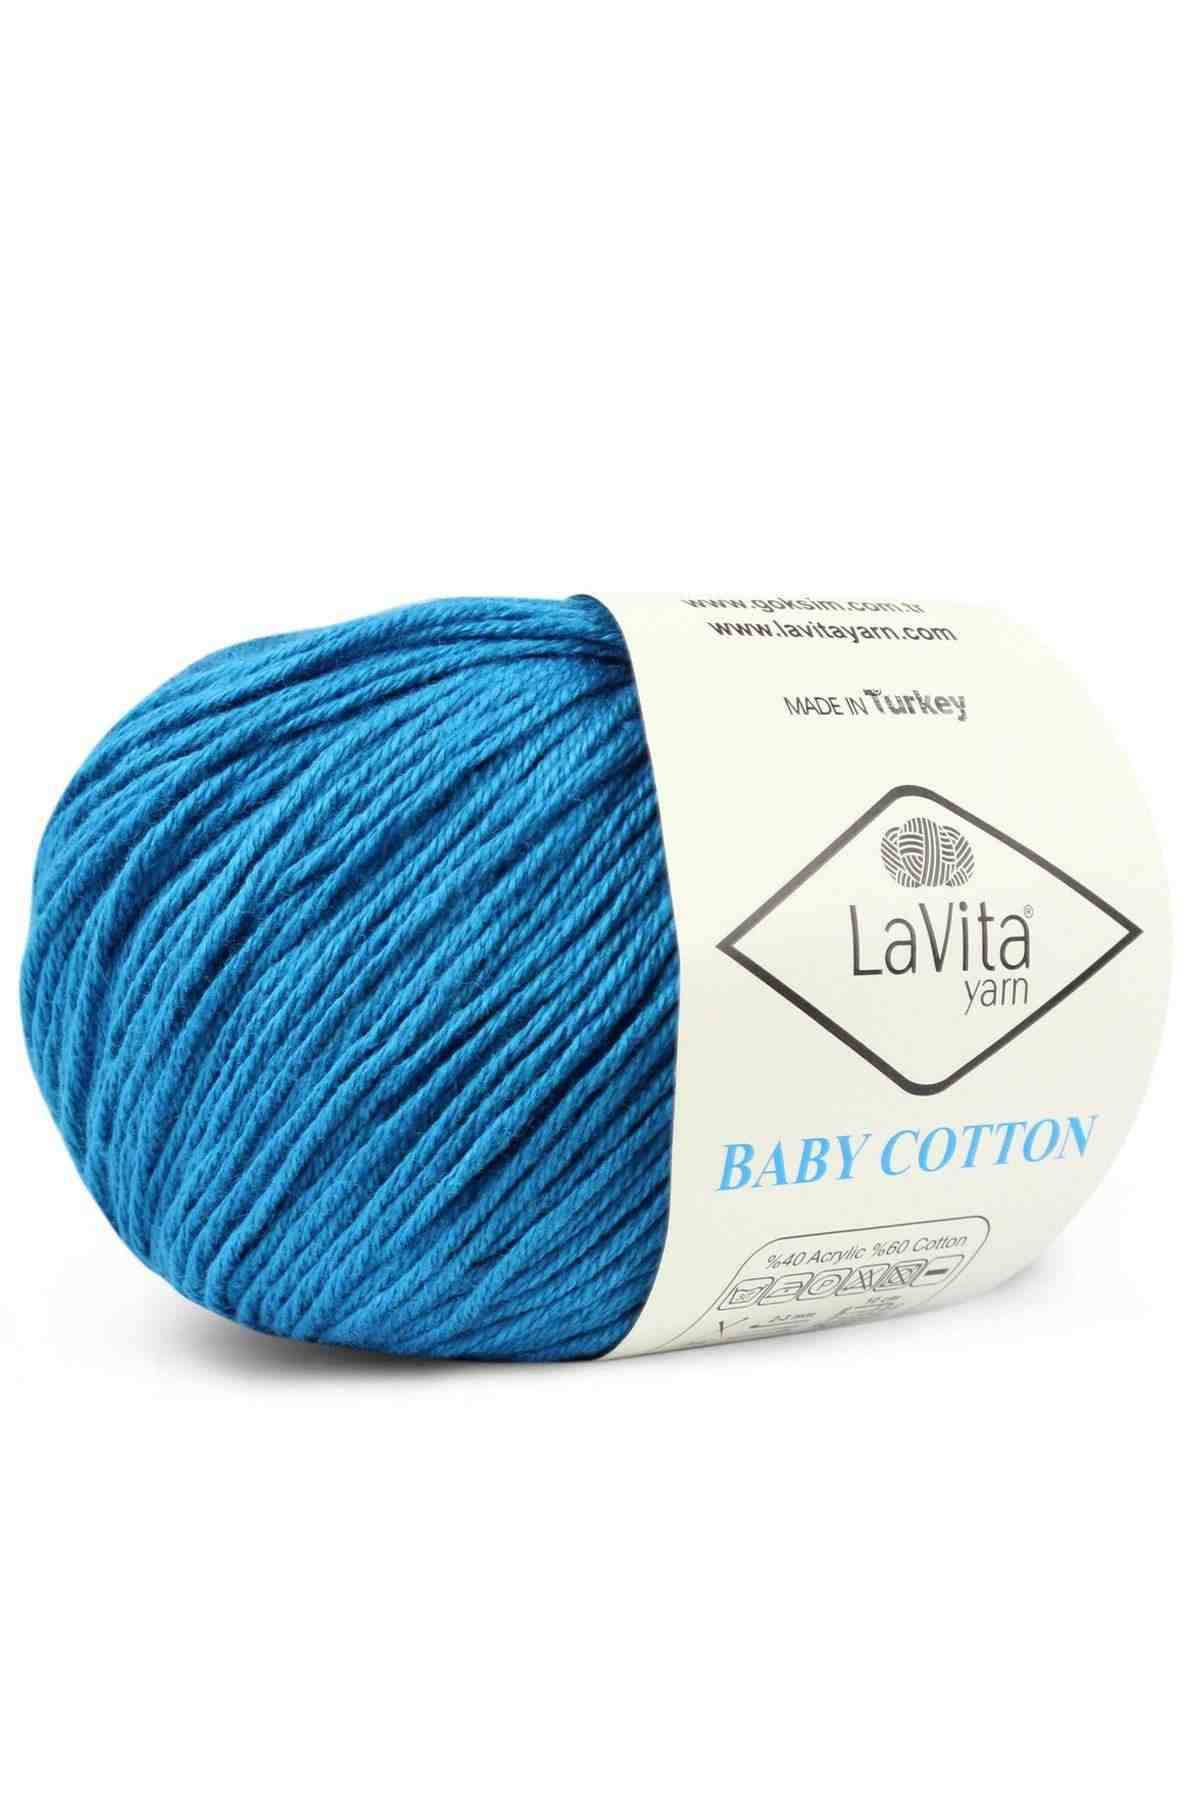 Lavita Baby Cotton Cotton Yarn